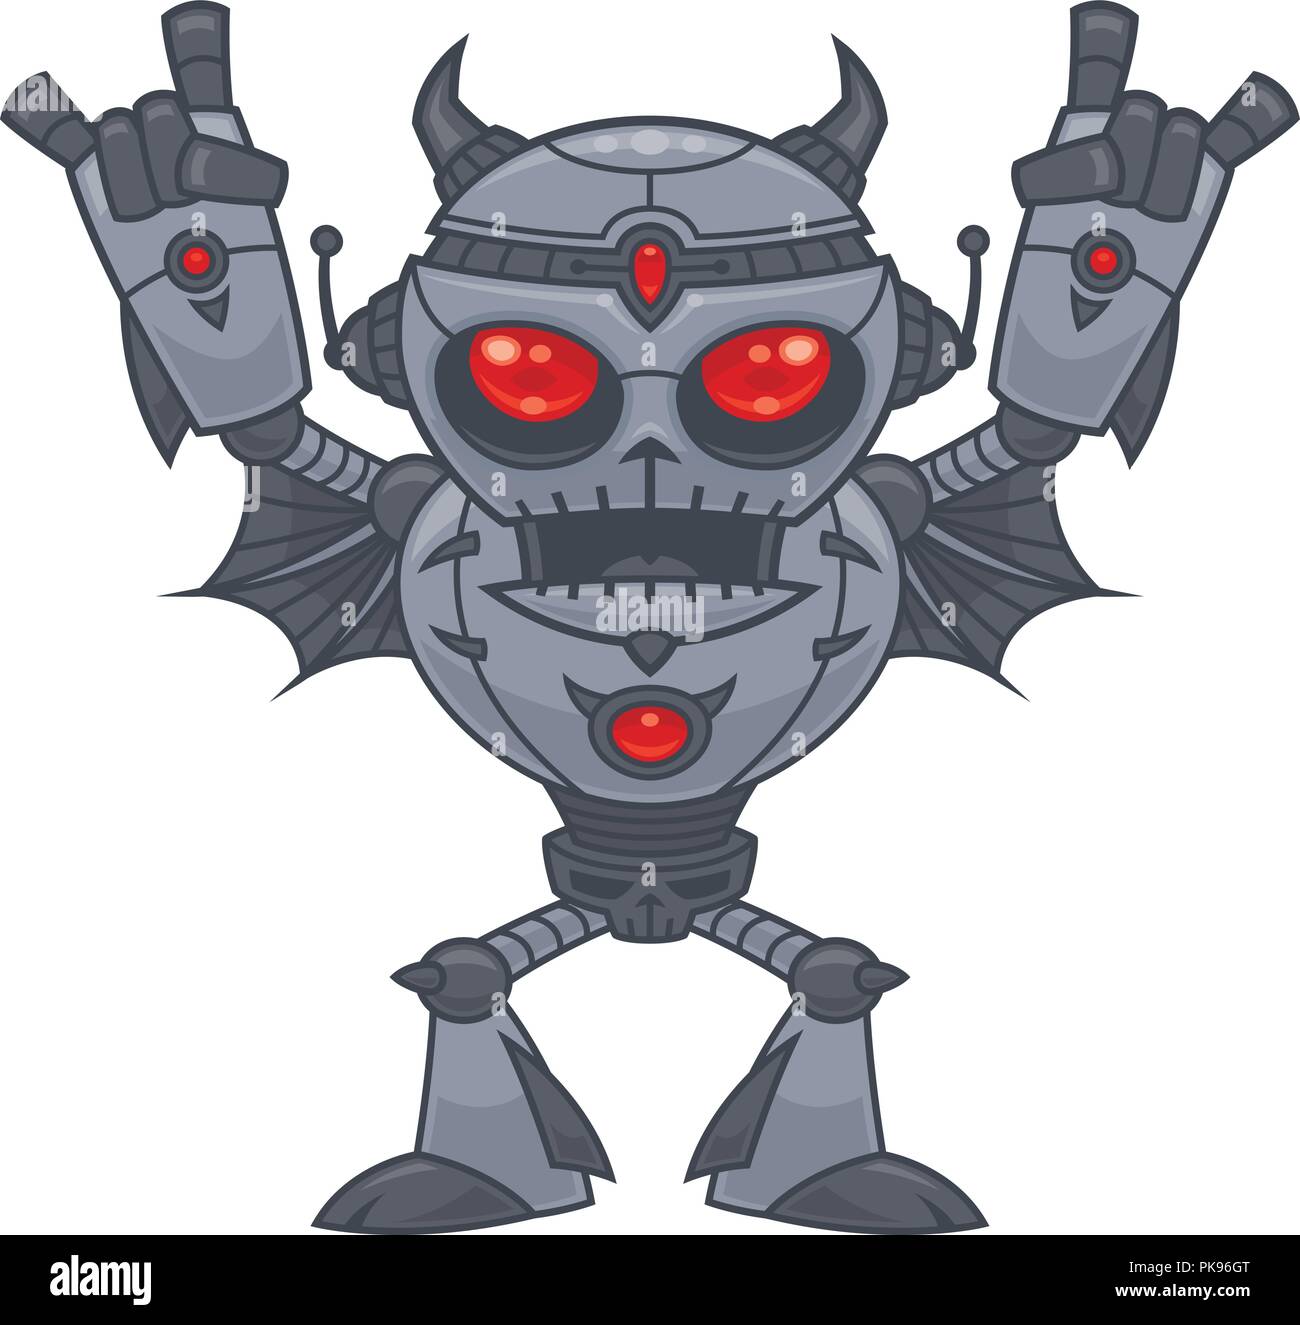 Metalhead - Heavy Metal Robot. Cartoon Vector illustration d'un heavy metal Red eyed devil robot avec aimant horn les gestes de la main. Illustration de Vecteur